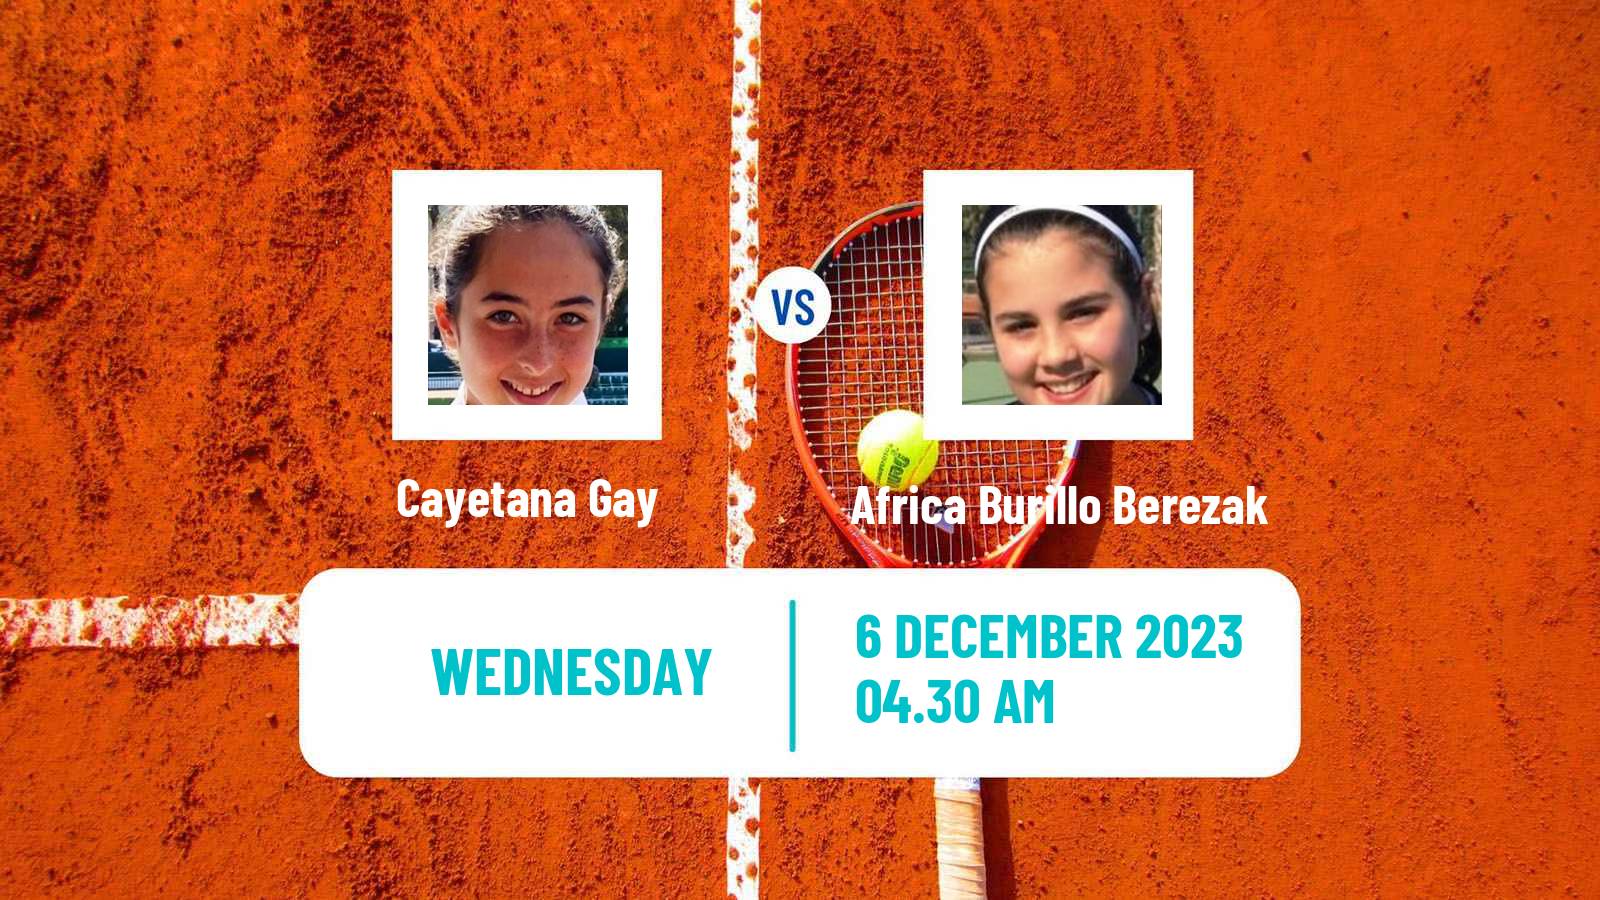 Tennis ITF W15 Valencia 2 Women Cayetana Gay - Africa Burillo Berezak